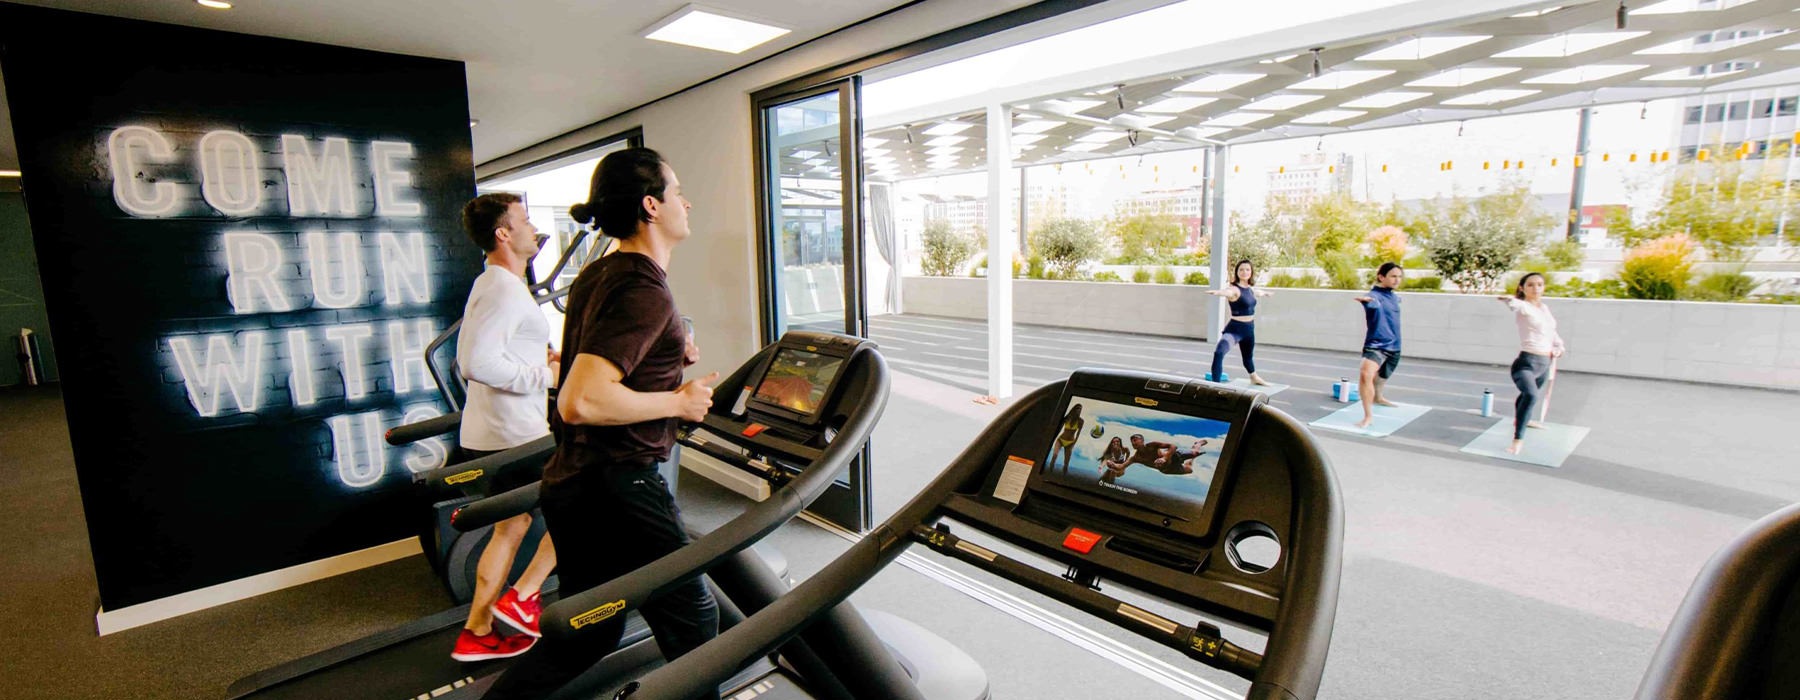 lifestyle image of people running on treadmills